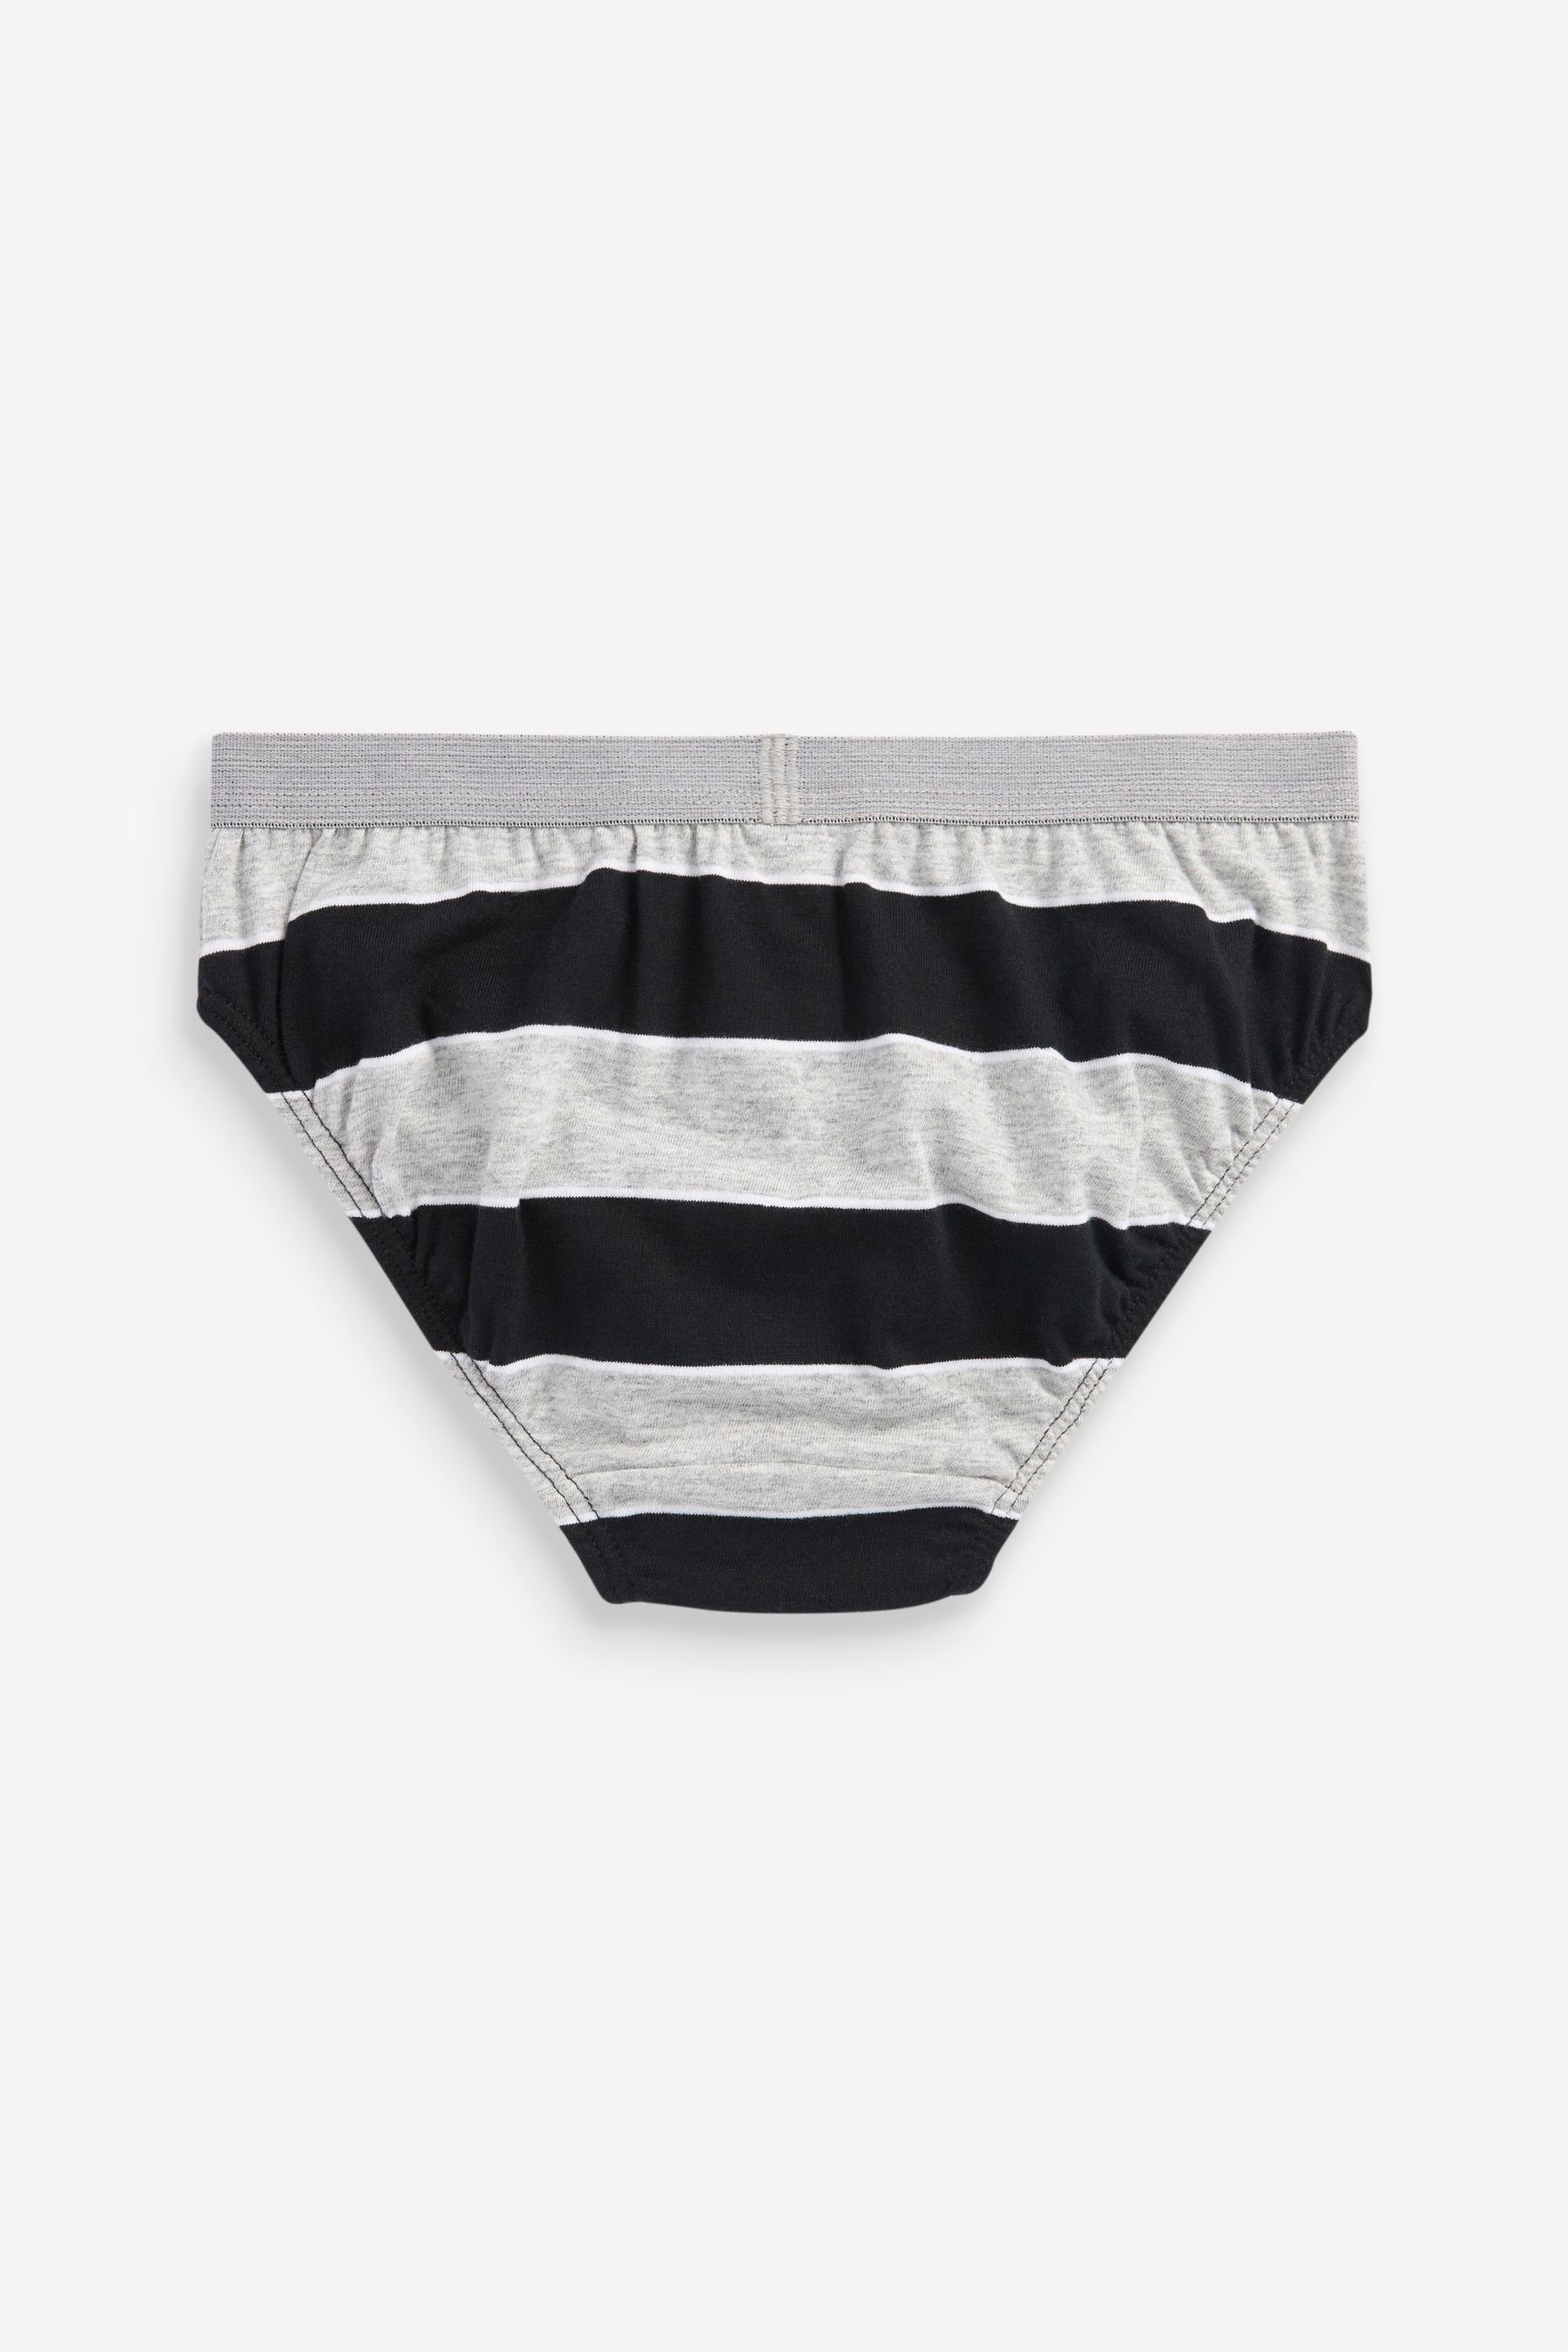 Next 5er-Pack (5-St) Stripe Black/White/Grey im Slip Unterhosen